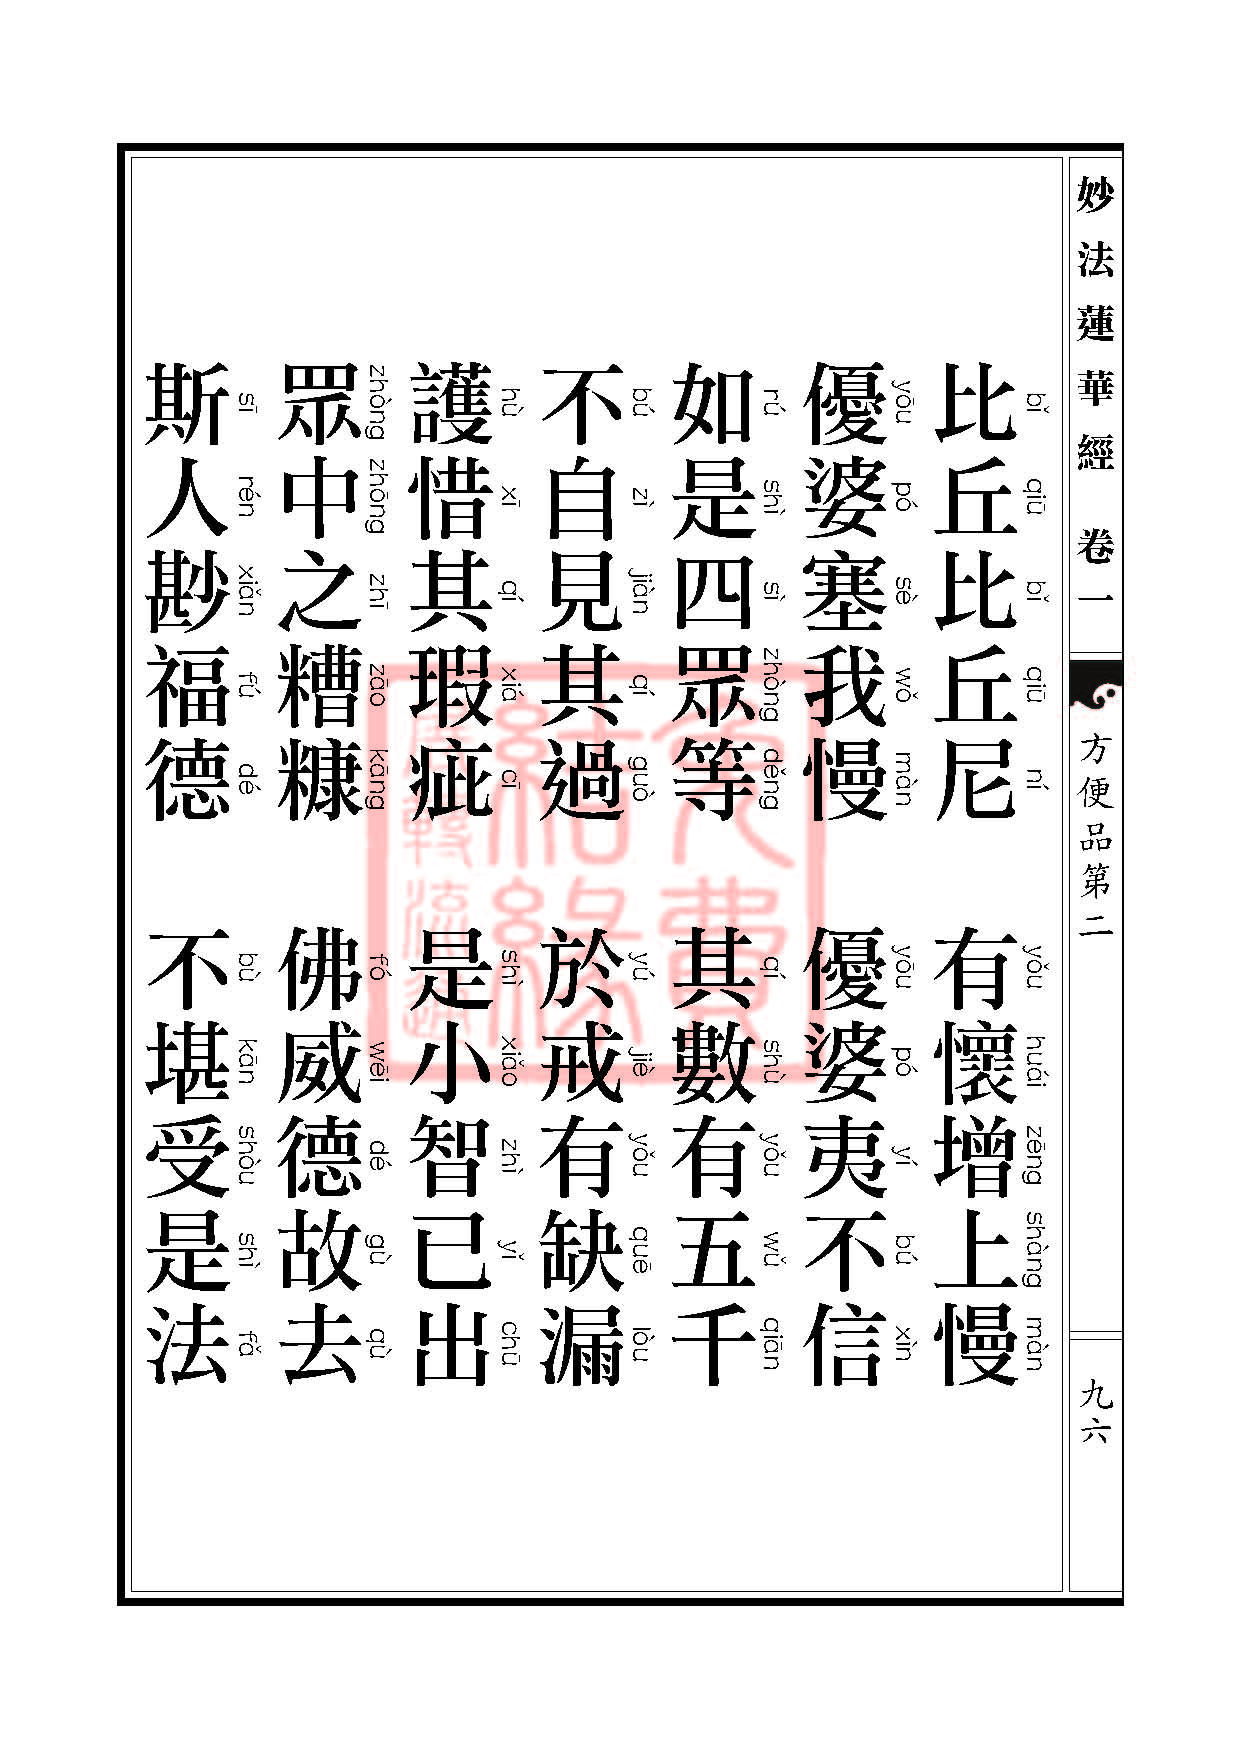 Book_FHJ_HK-A6-PY_Web_页面_096.jpg